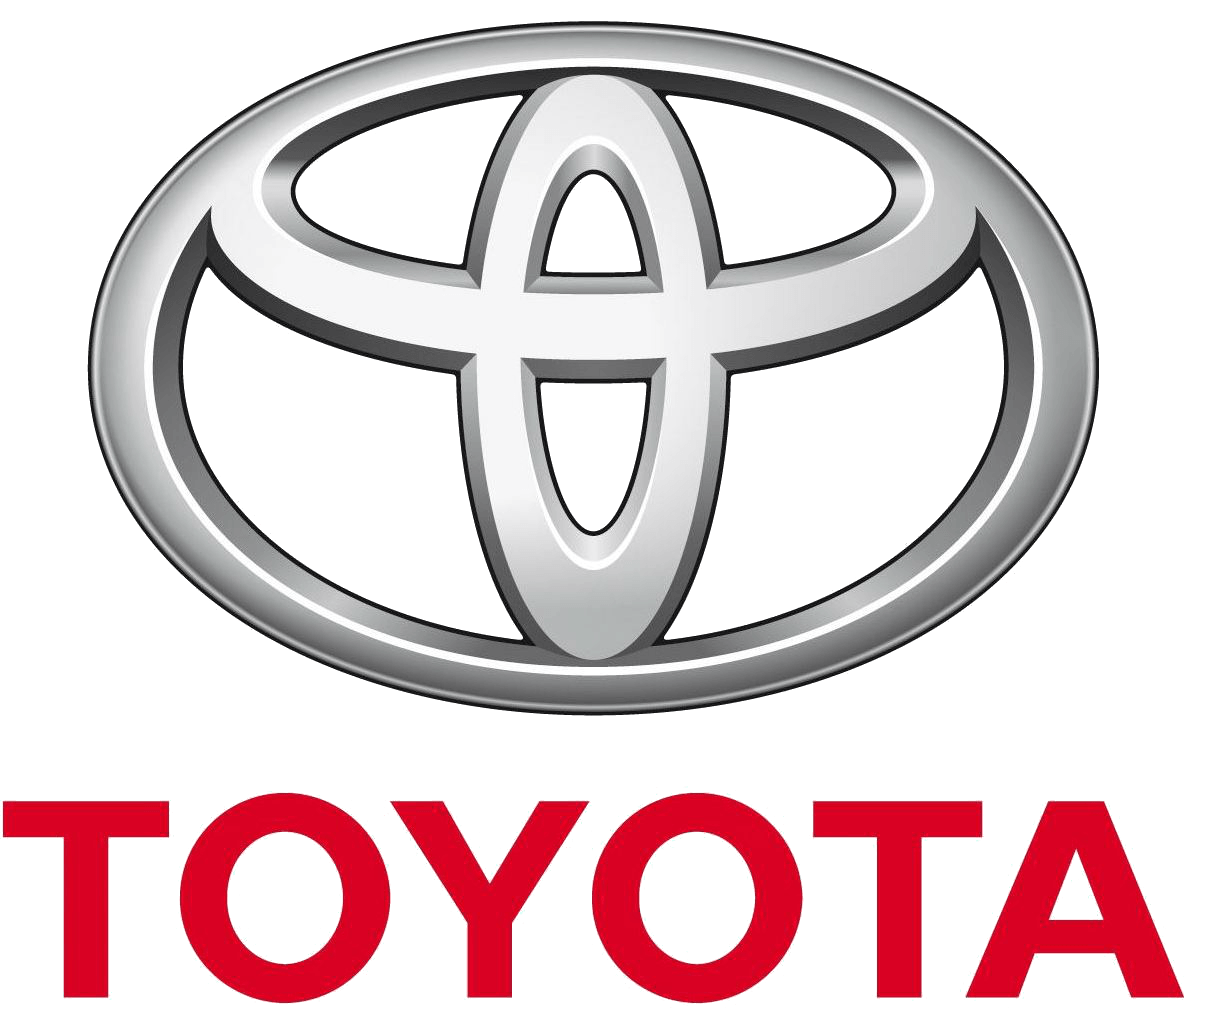 One Toyota Logo - Toyota Logo, Toyota Car Symbol Meaning and History | Car Brand Names.com